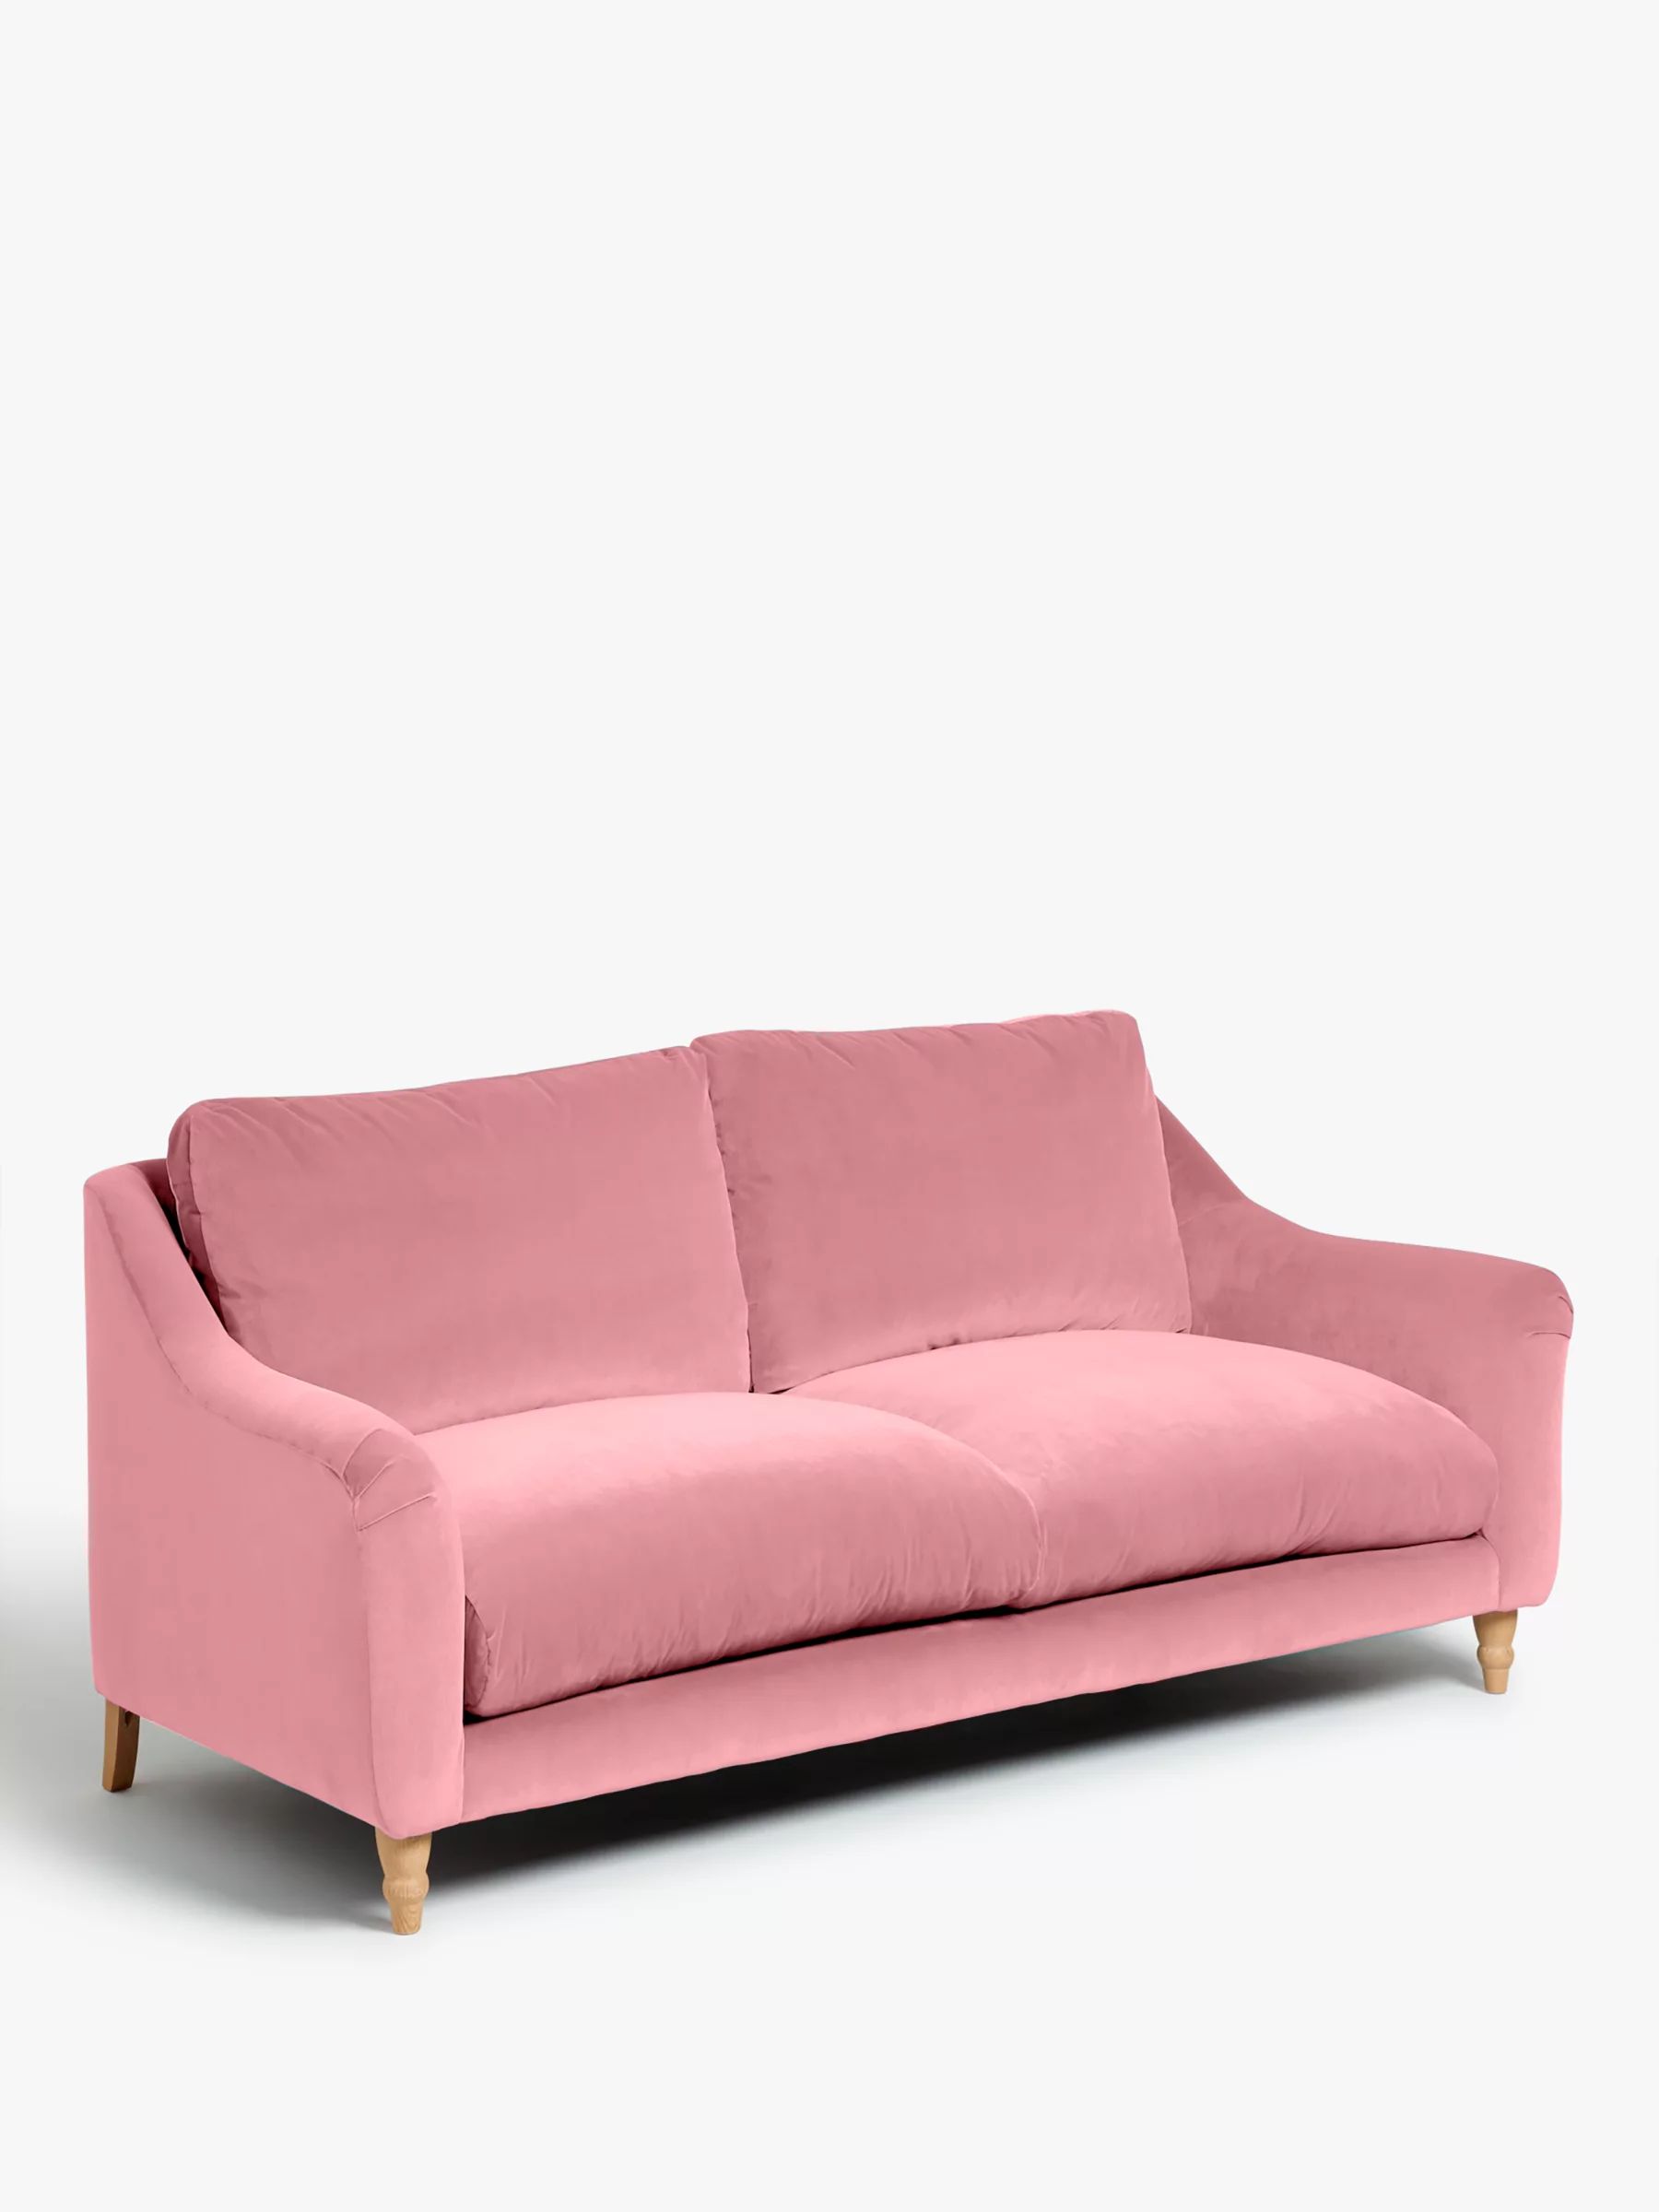 Schmoozer Medium 2 Seater Sofa by Loaf at John Lewis, Clever Velvet Dusty Rose | John Lewis UK